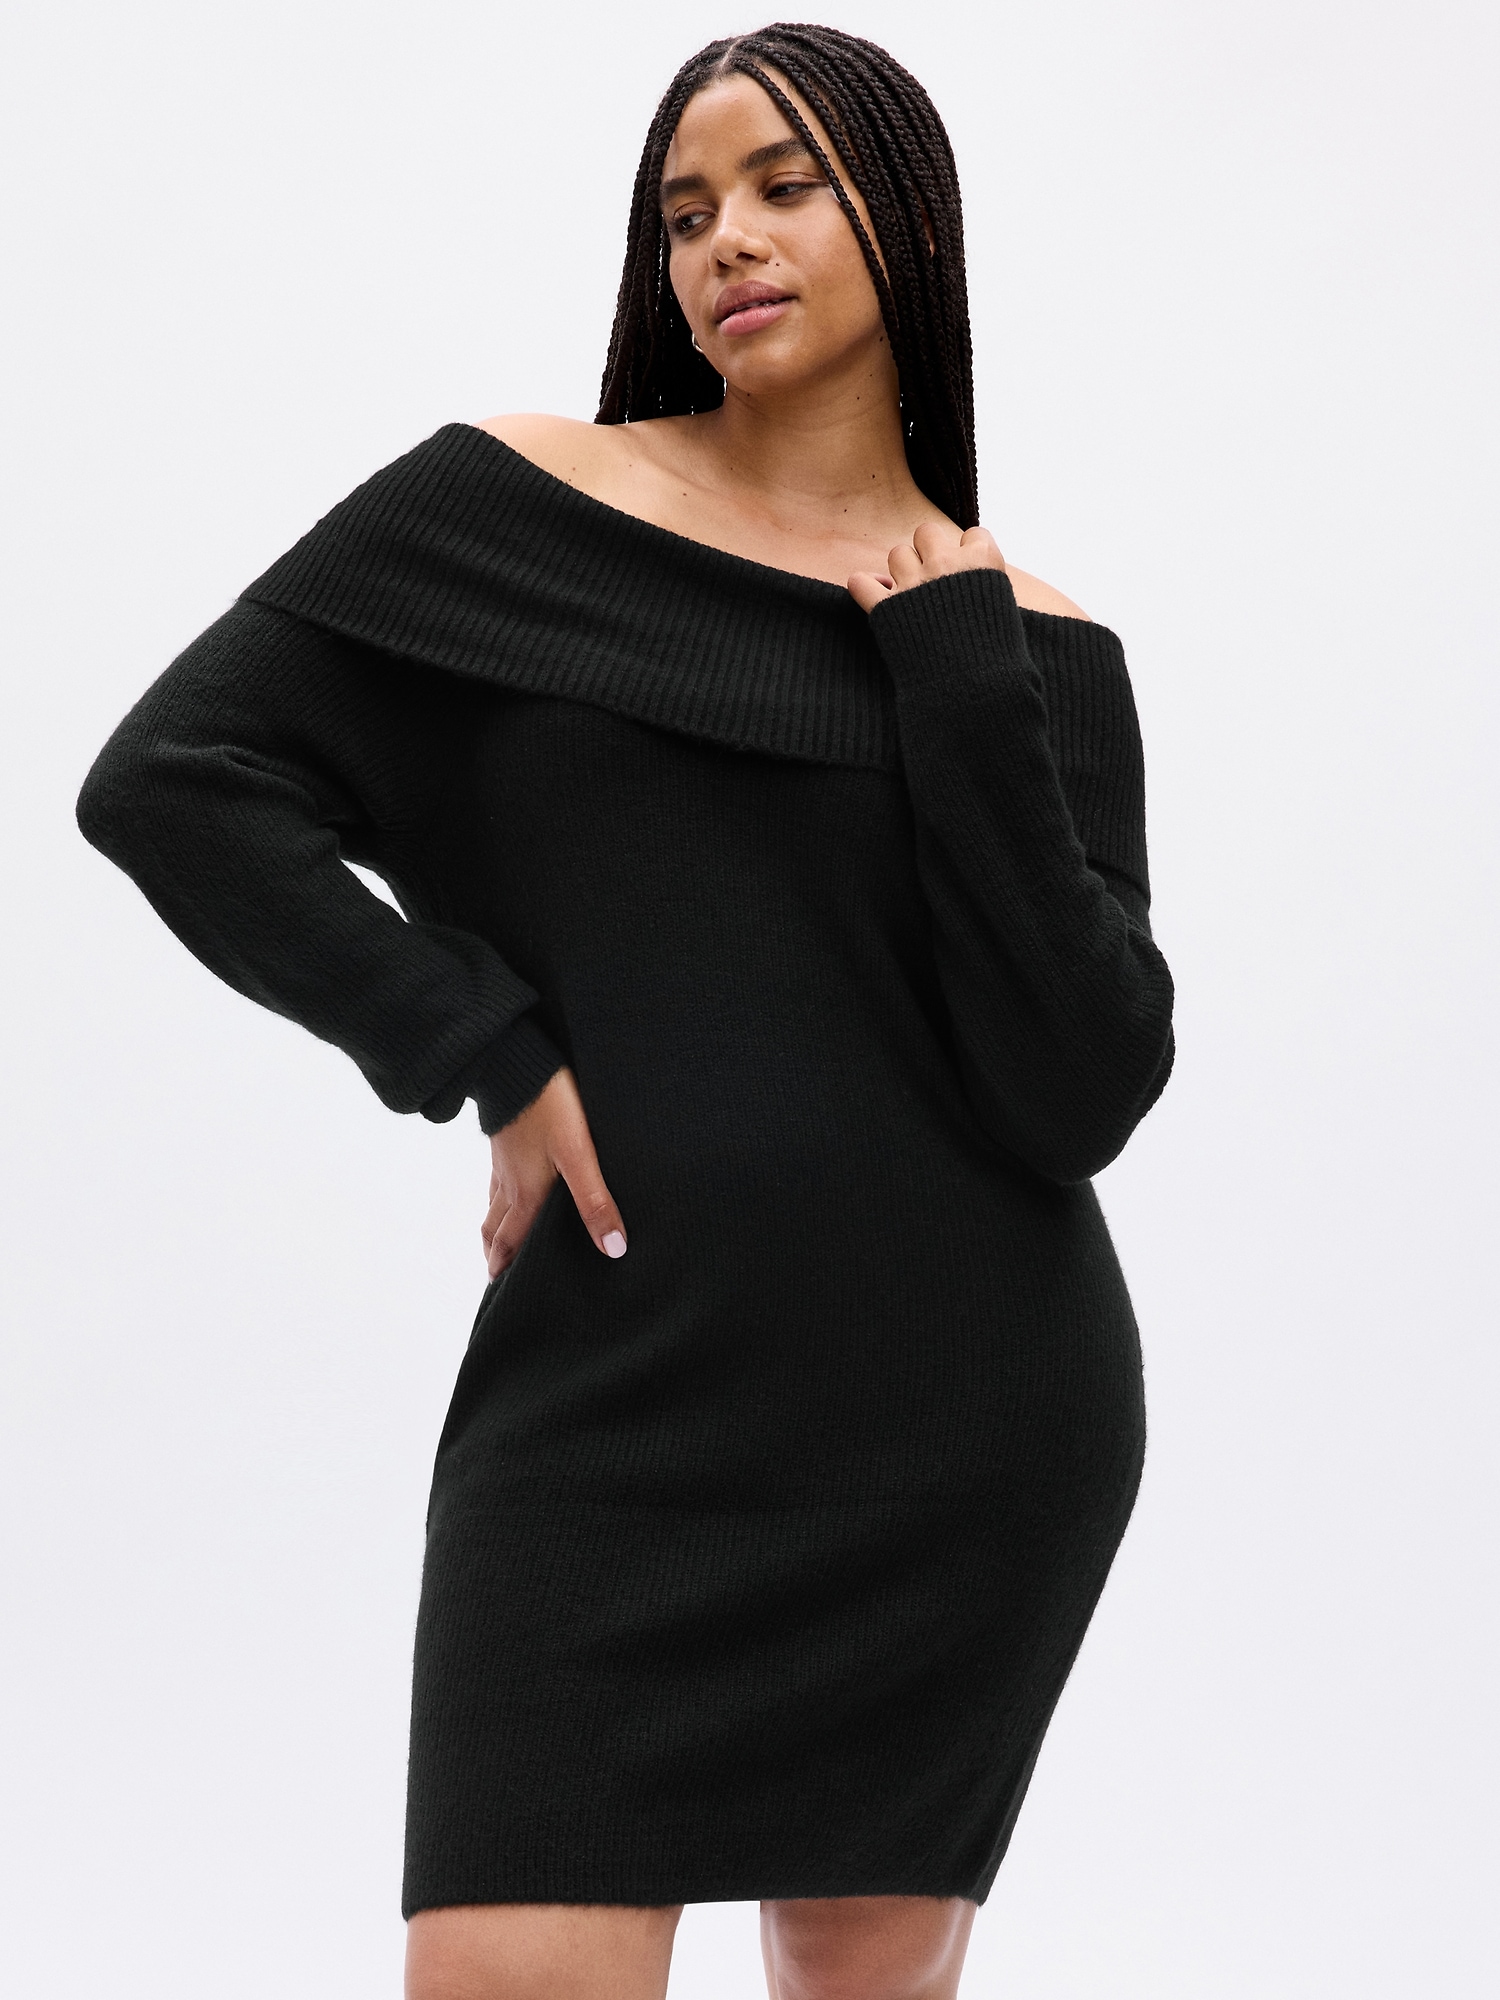 Scoop Me Away Sweater Dress (Black)- FINAL SALE